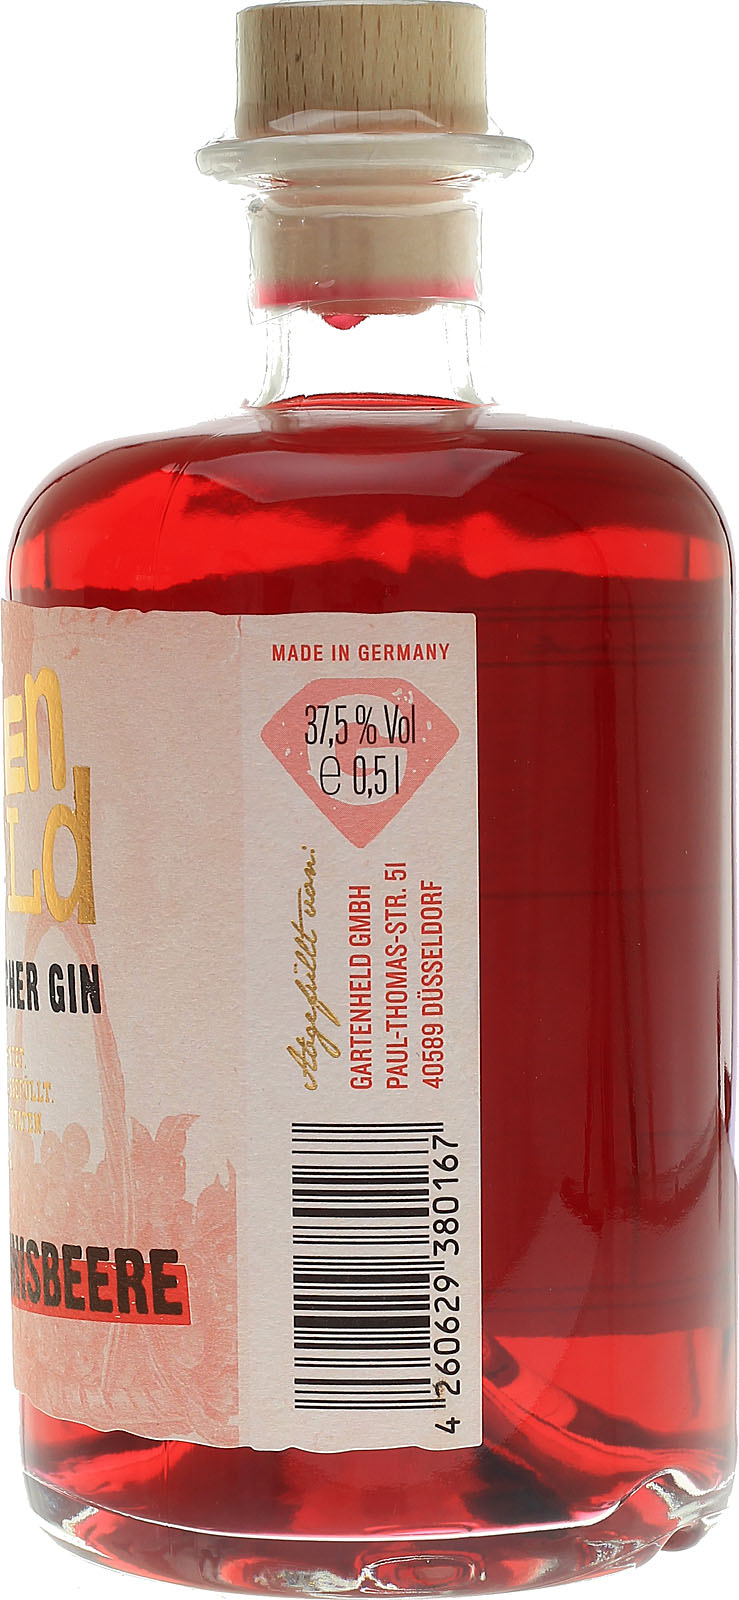 Gartenheld Botanischer Gin - Liter Johannisbeere Be 0,5